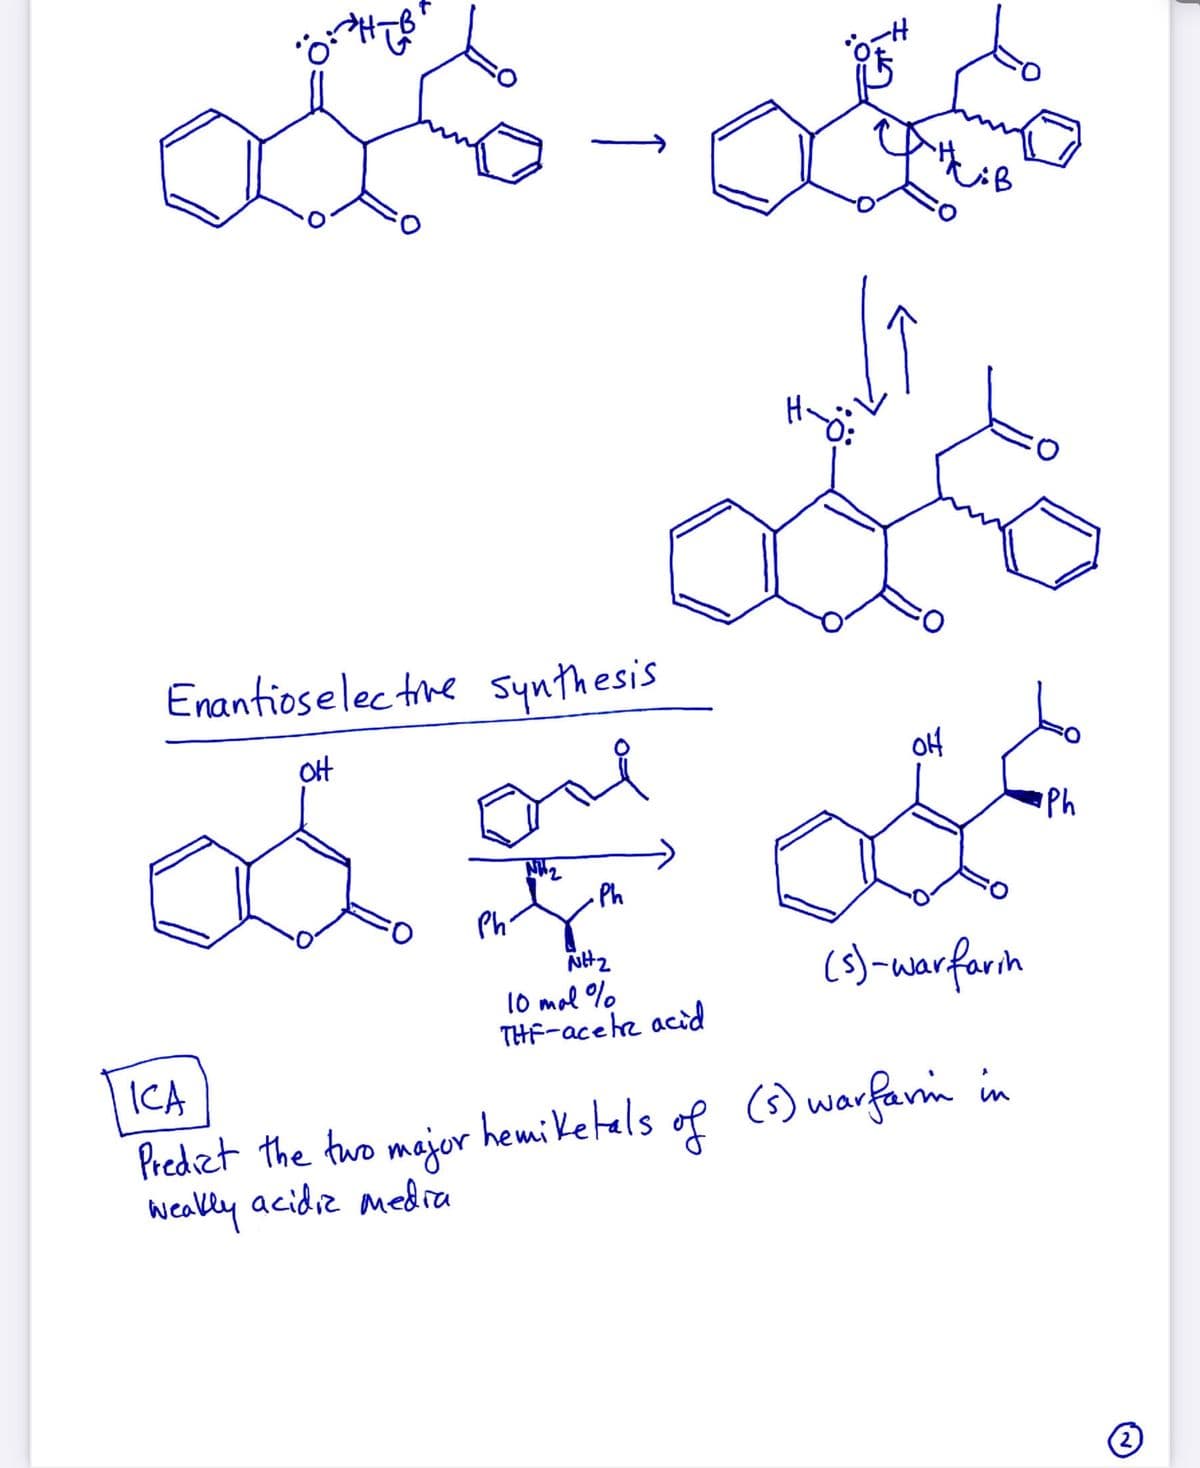 H-
Enantioselec the Synthesis
Ot
Ph
Ph
Ph
(3)-warforin
l0 mal %
THF-acehe acid
ICA
(3) warfarm in
Prediet the two majer hemiketals
weally acidiz media
of
